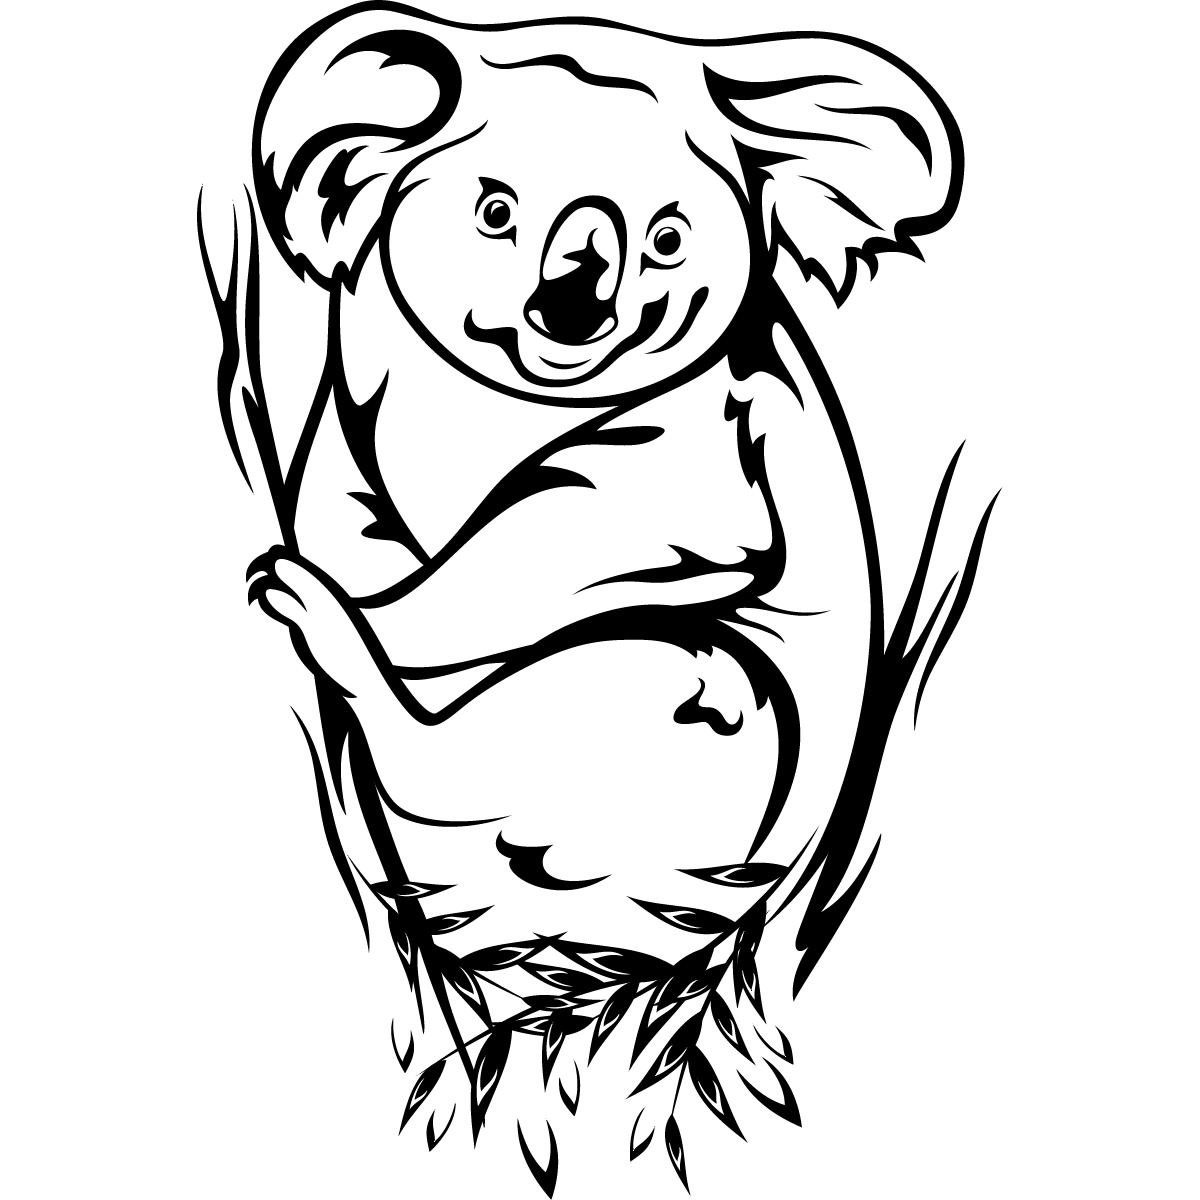 Koala bear clip art | Clipart Panda - Free Clipart Images